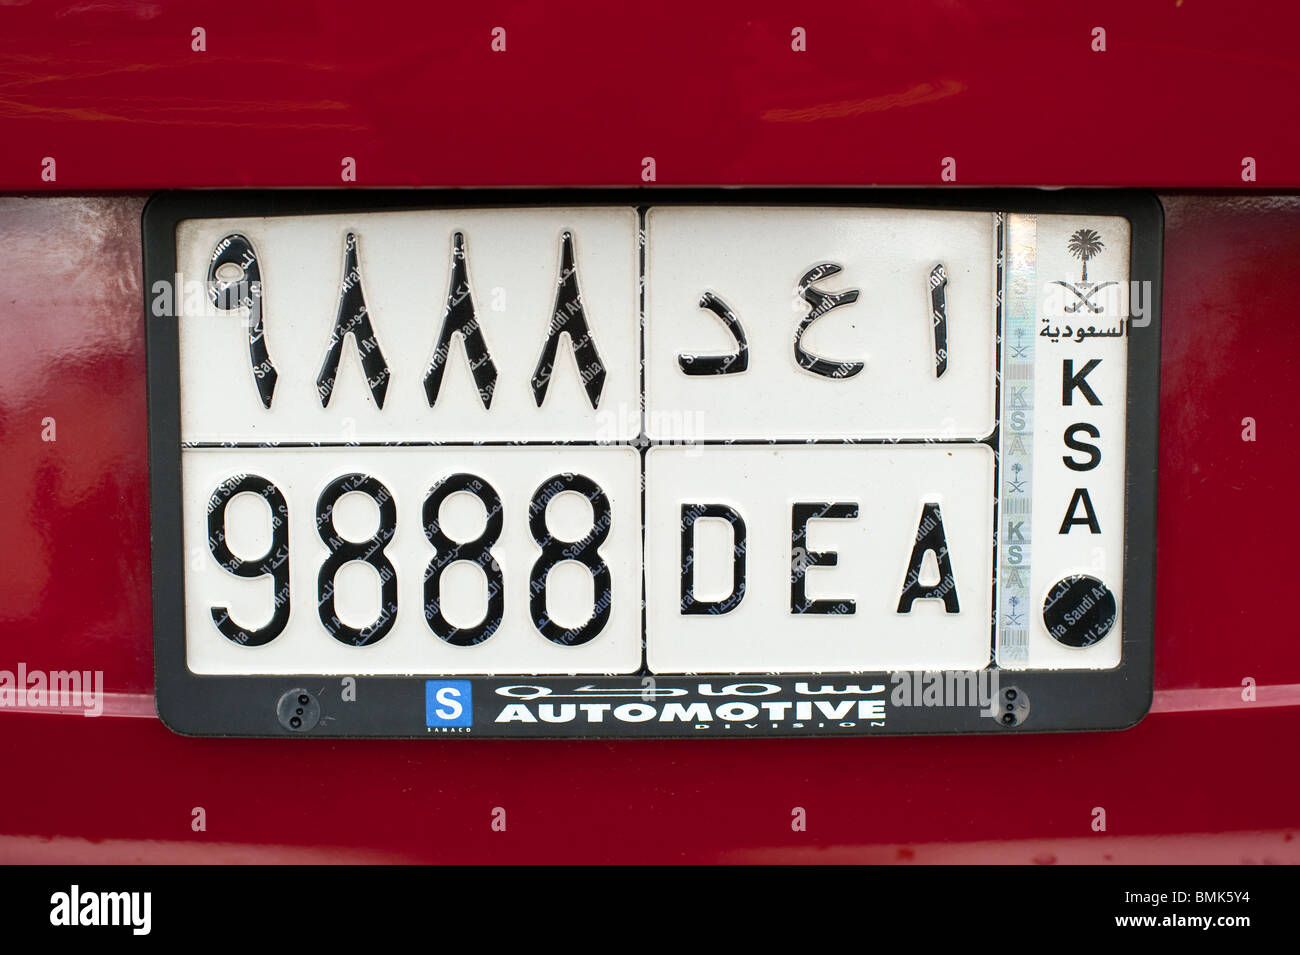 Placa de matrícula del coche KSA Reino de Arabia Saudita Foto de stock